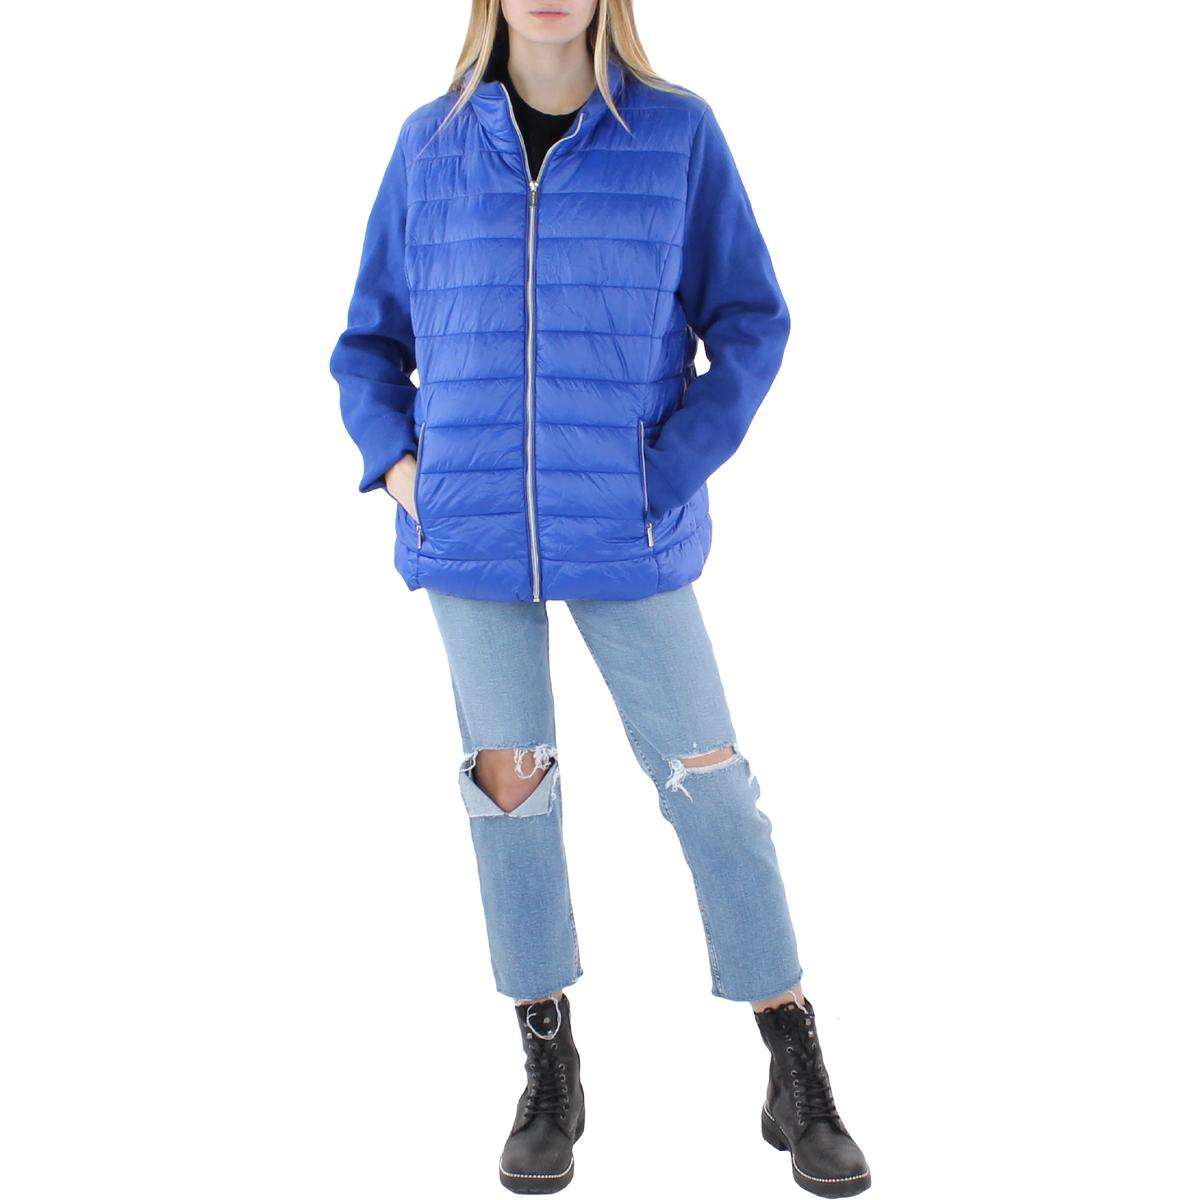 Passend Manieren Vrijstelling Calvin Klein Womens Warm Short Sweater Sleeve Puffer Jacket Coat BHFO 1142  | eBay